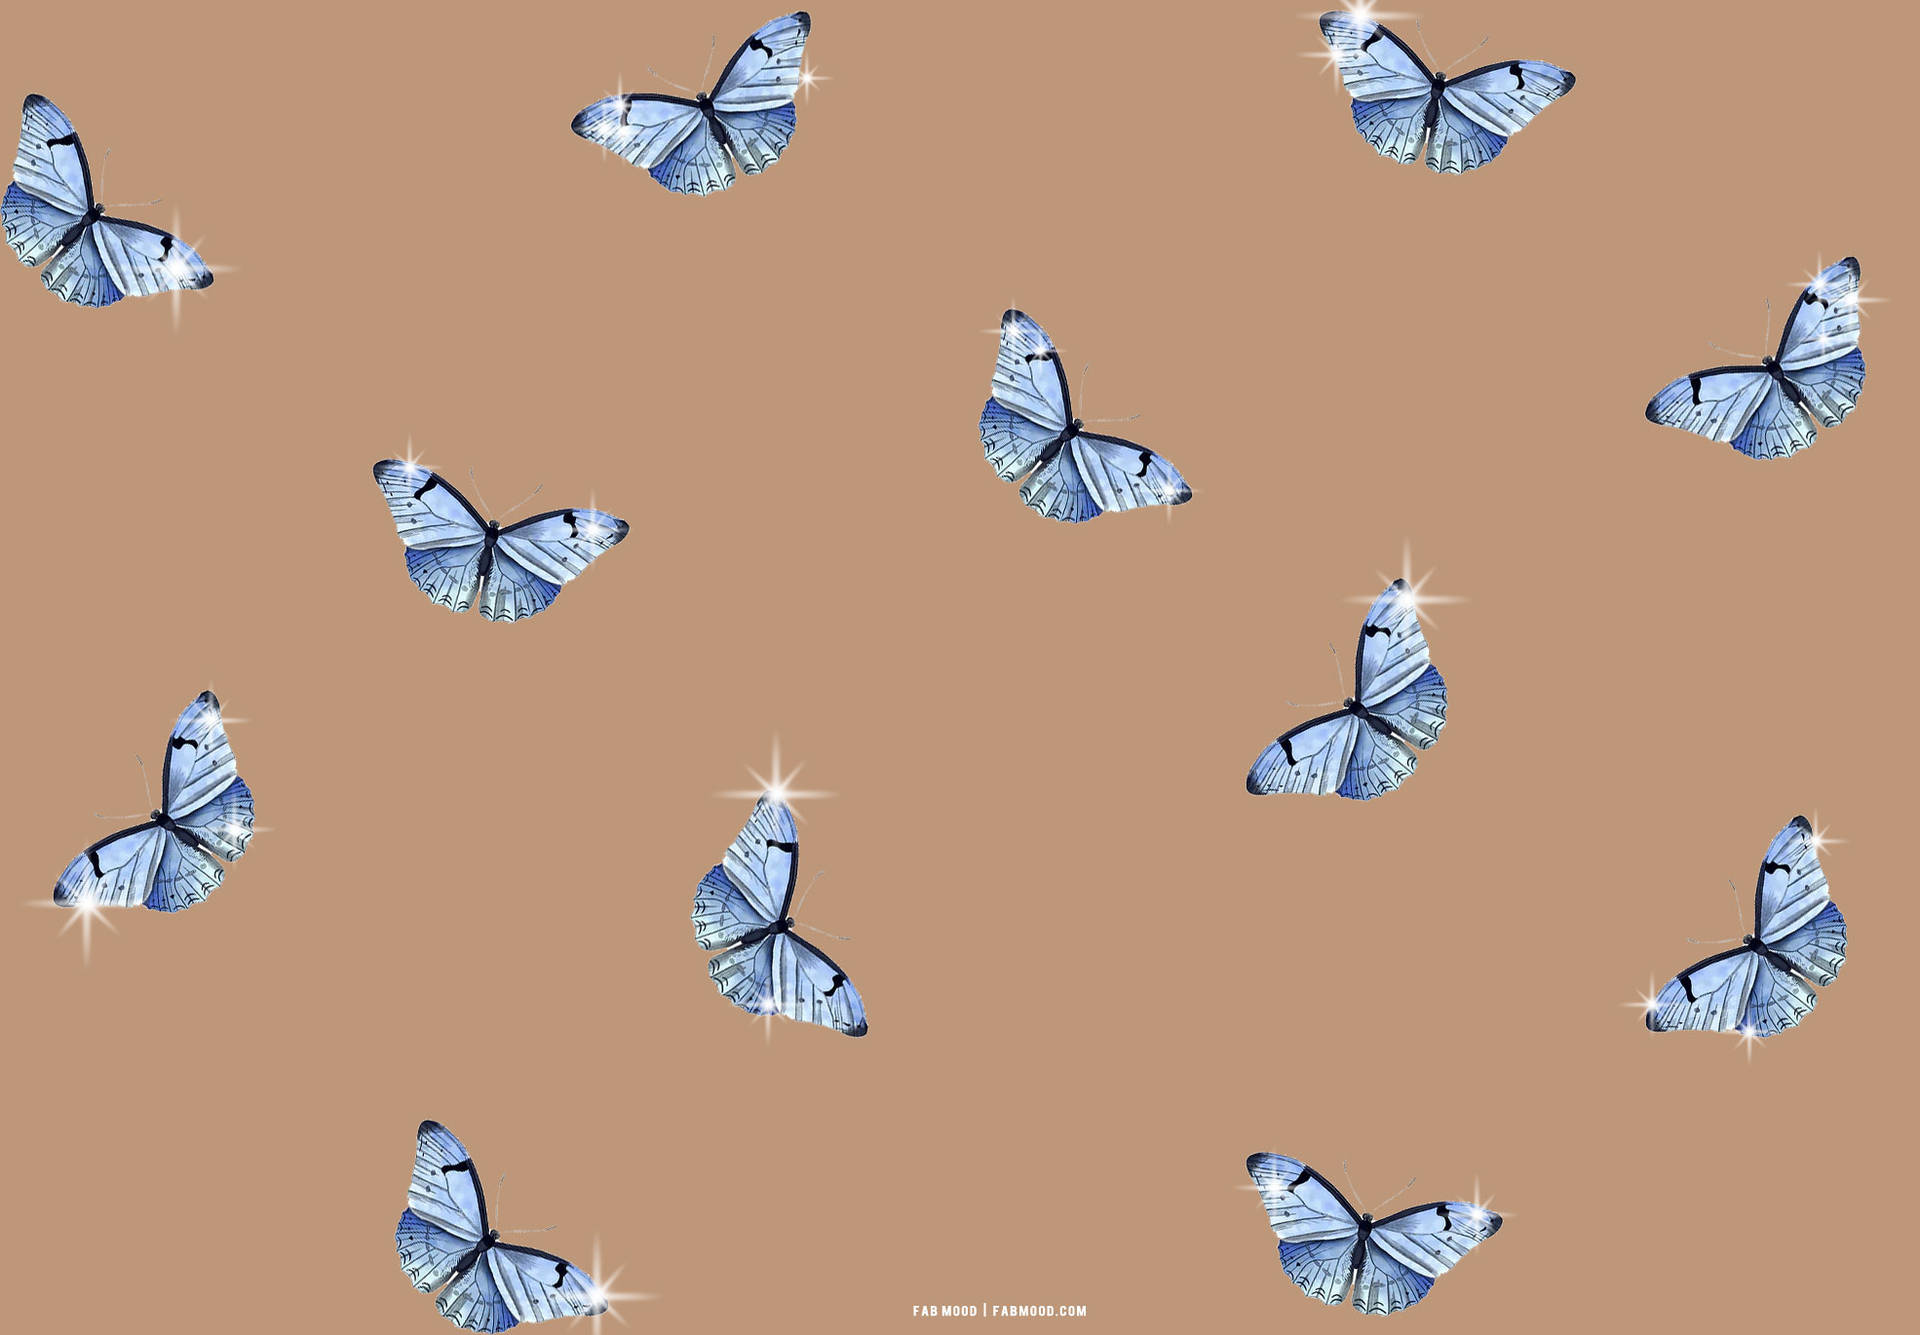 Butterfly Aesthetic Sparkling Wings Wallpaper